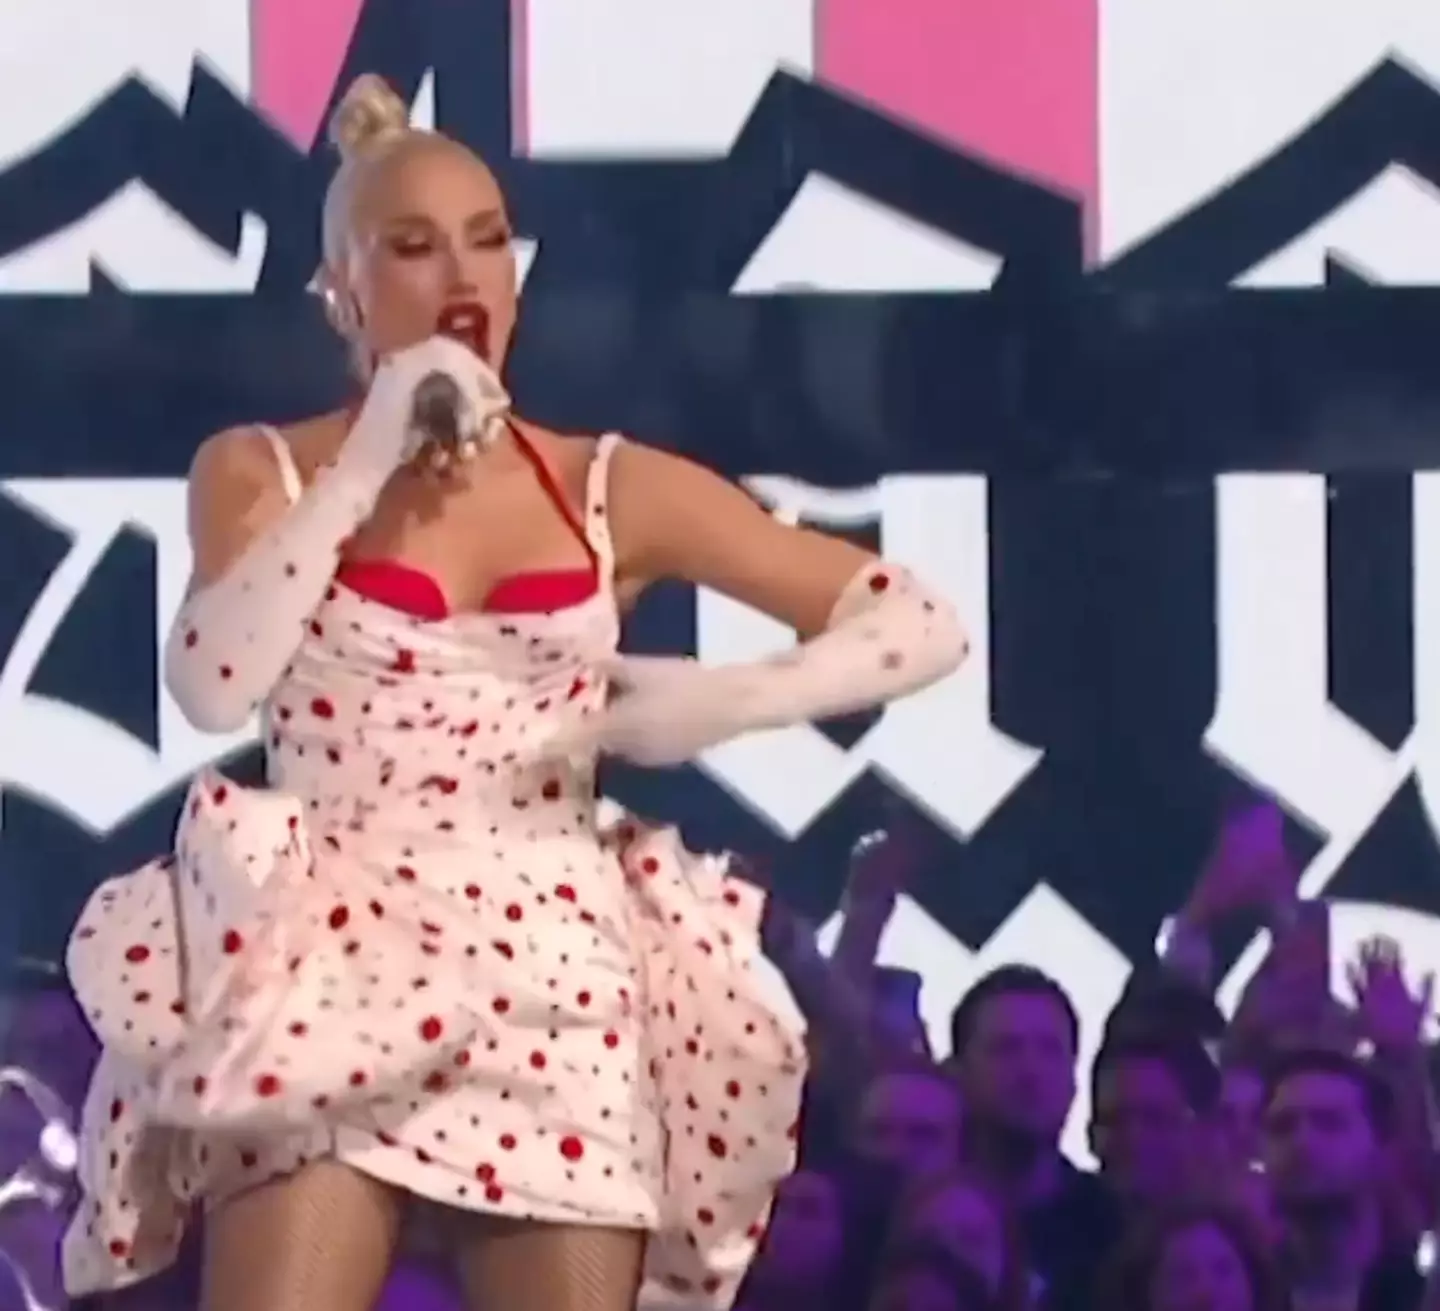 Fans were left divided over Gwen Stefani's rendition of 'Just a Girl'.